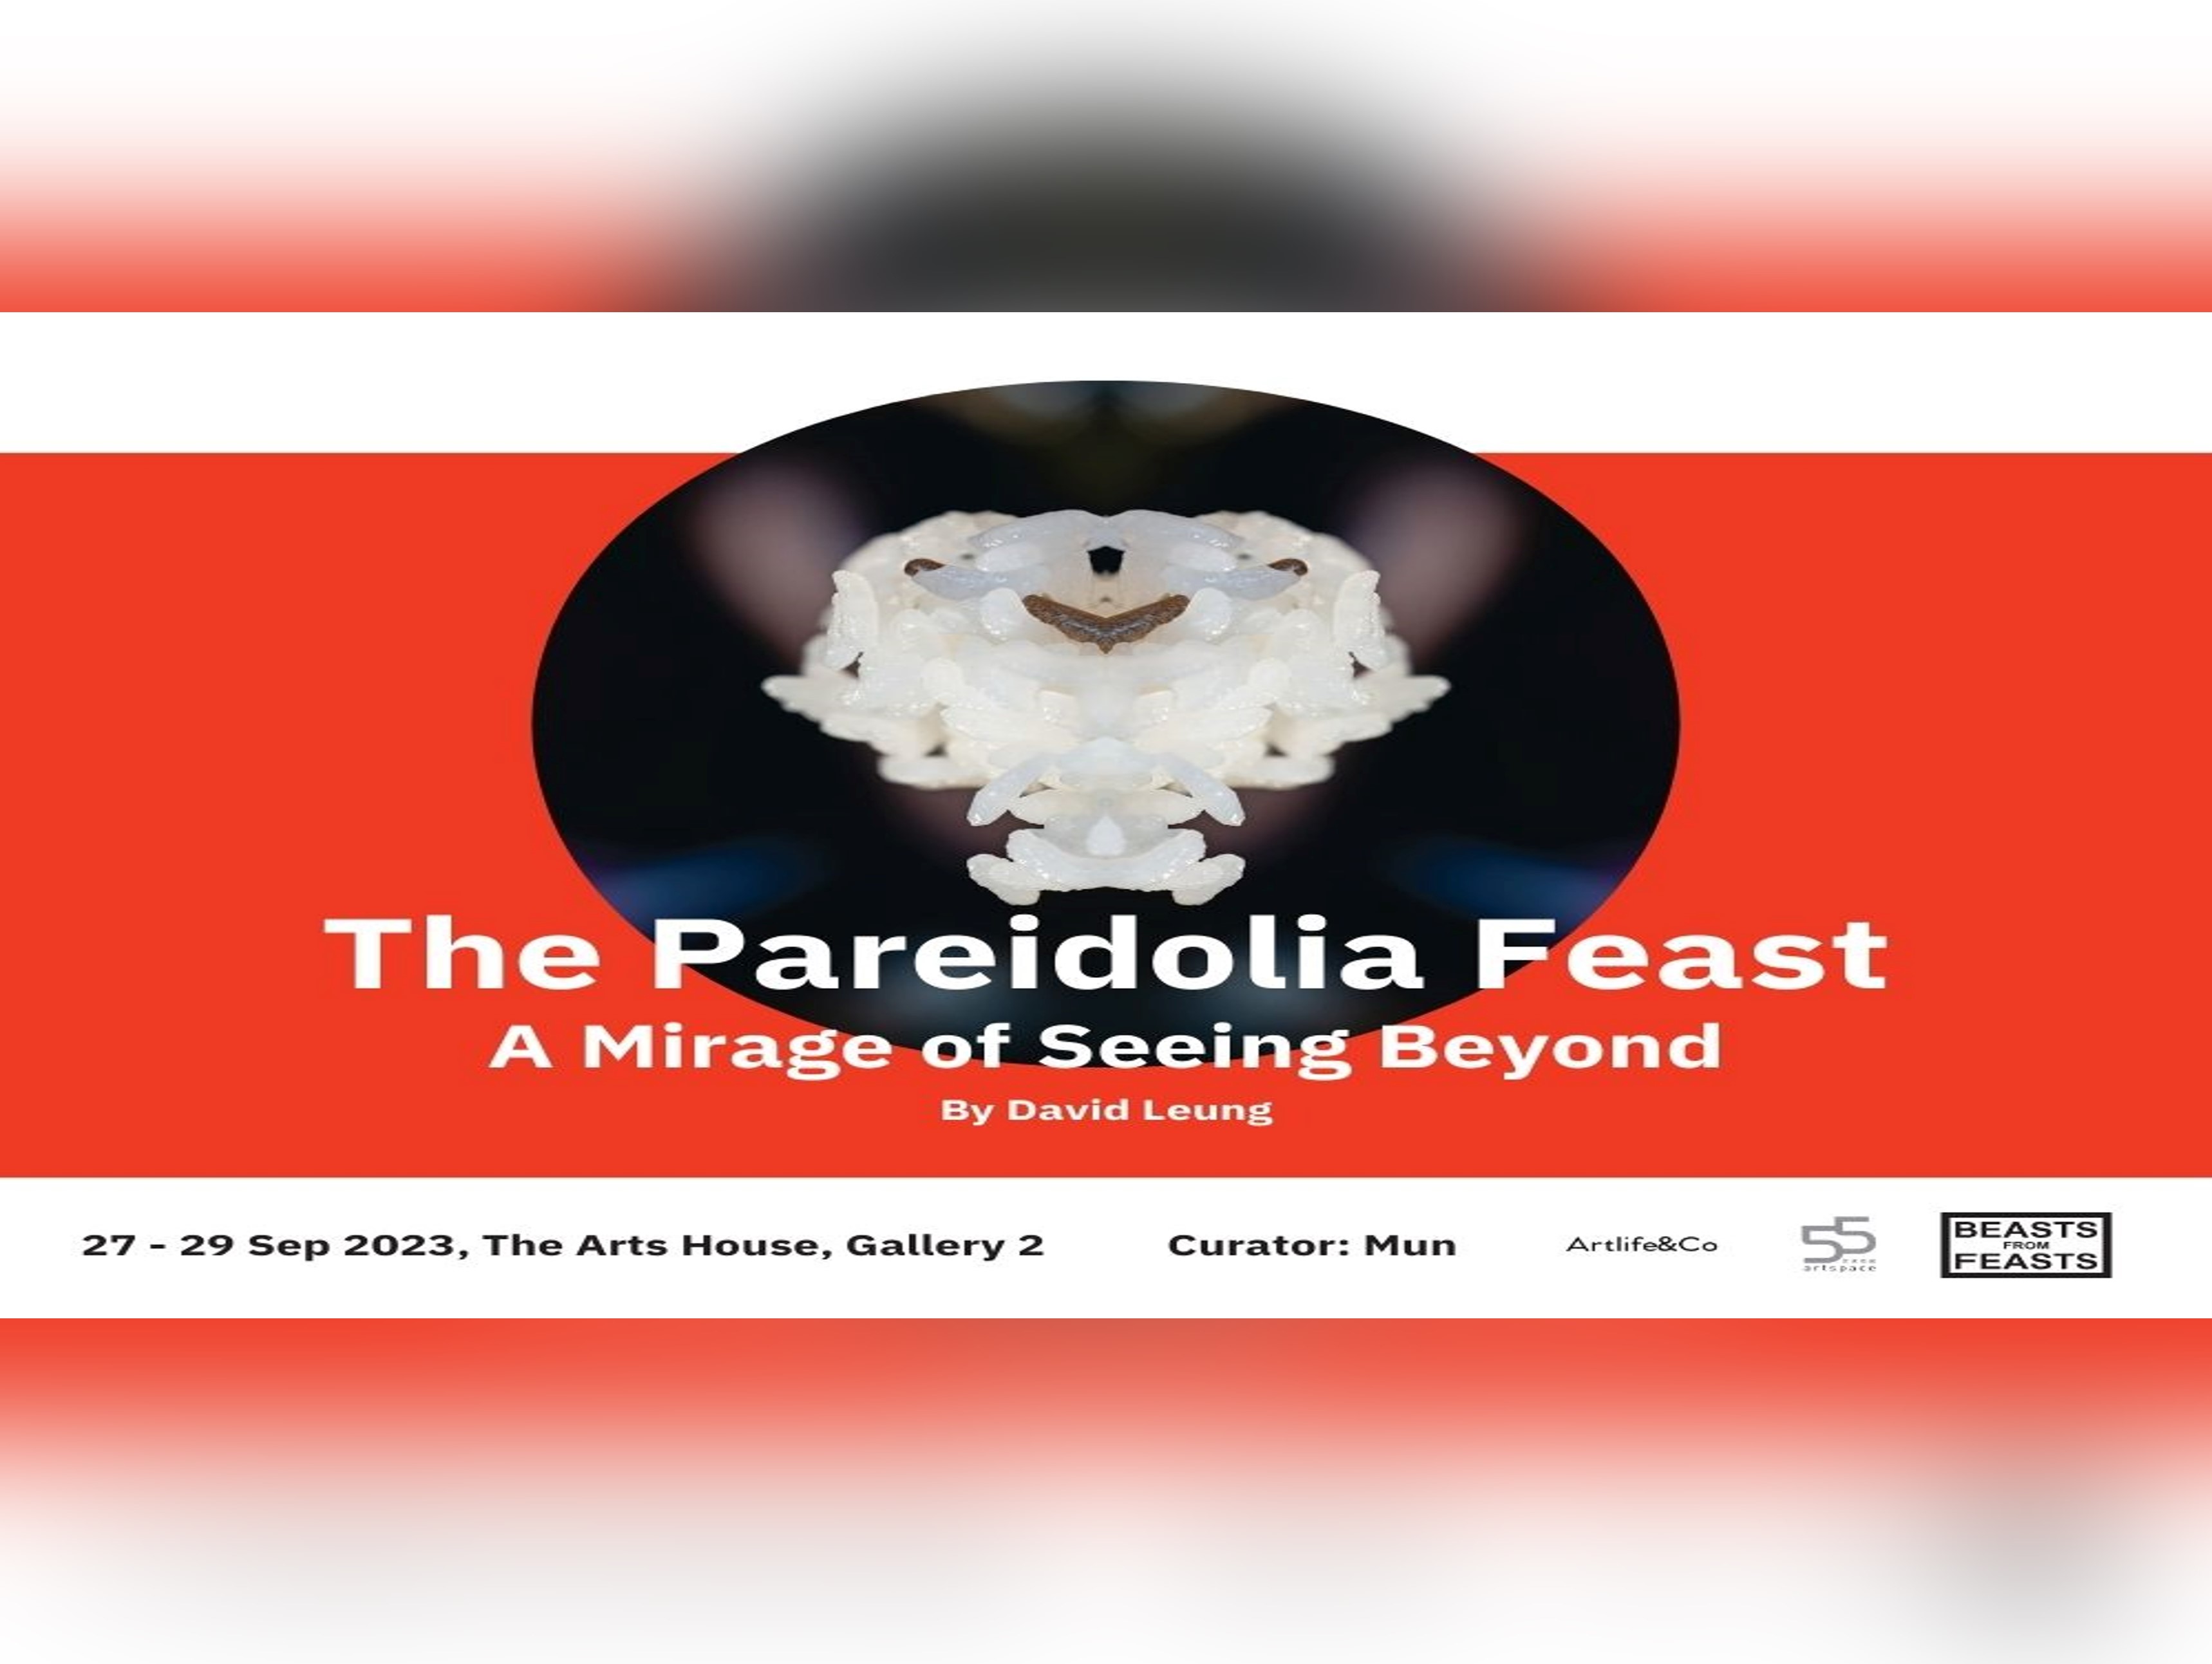 The Pareidolia Feast